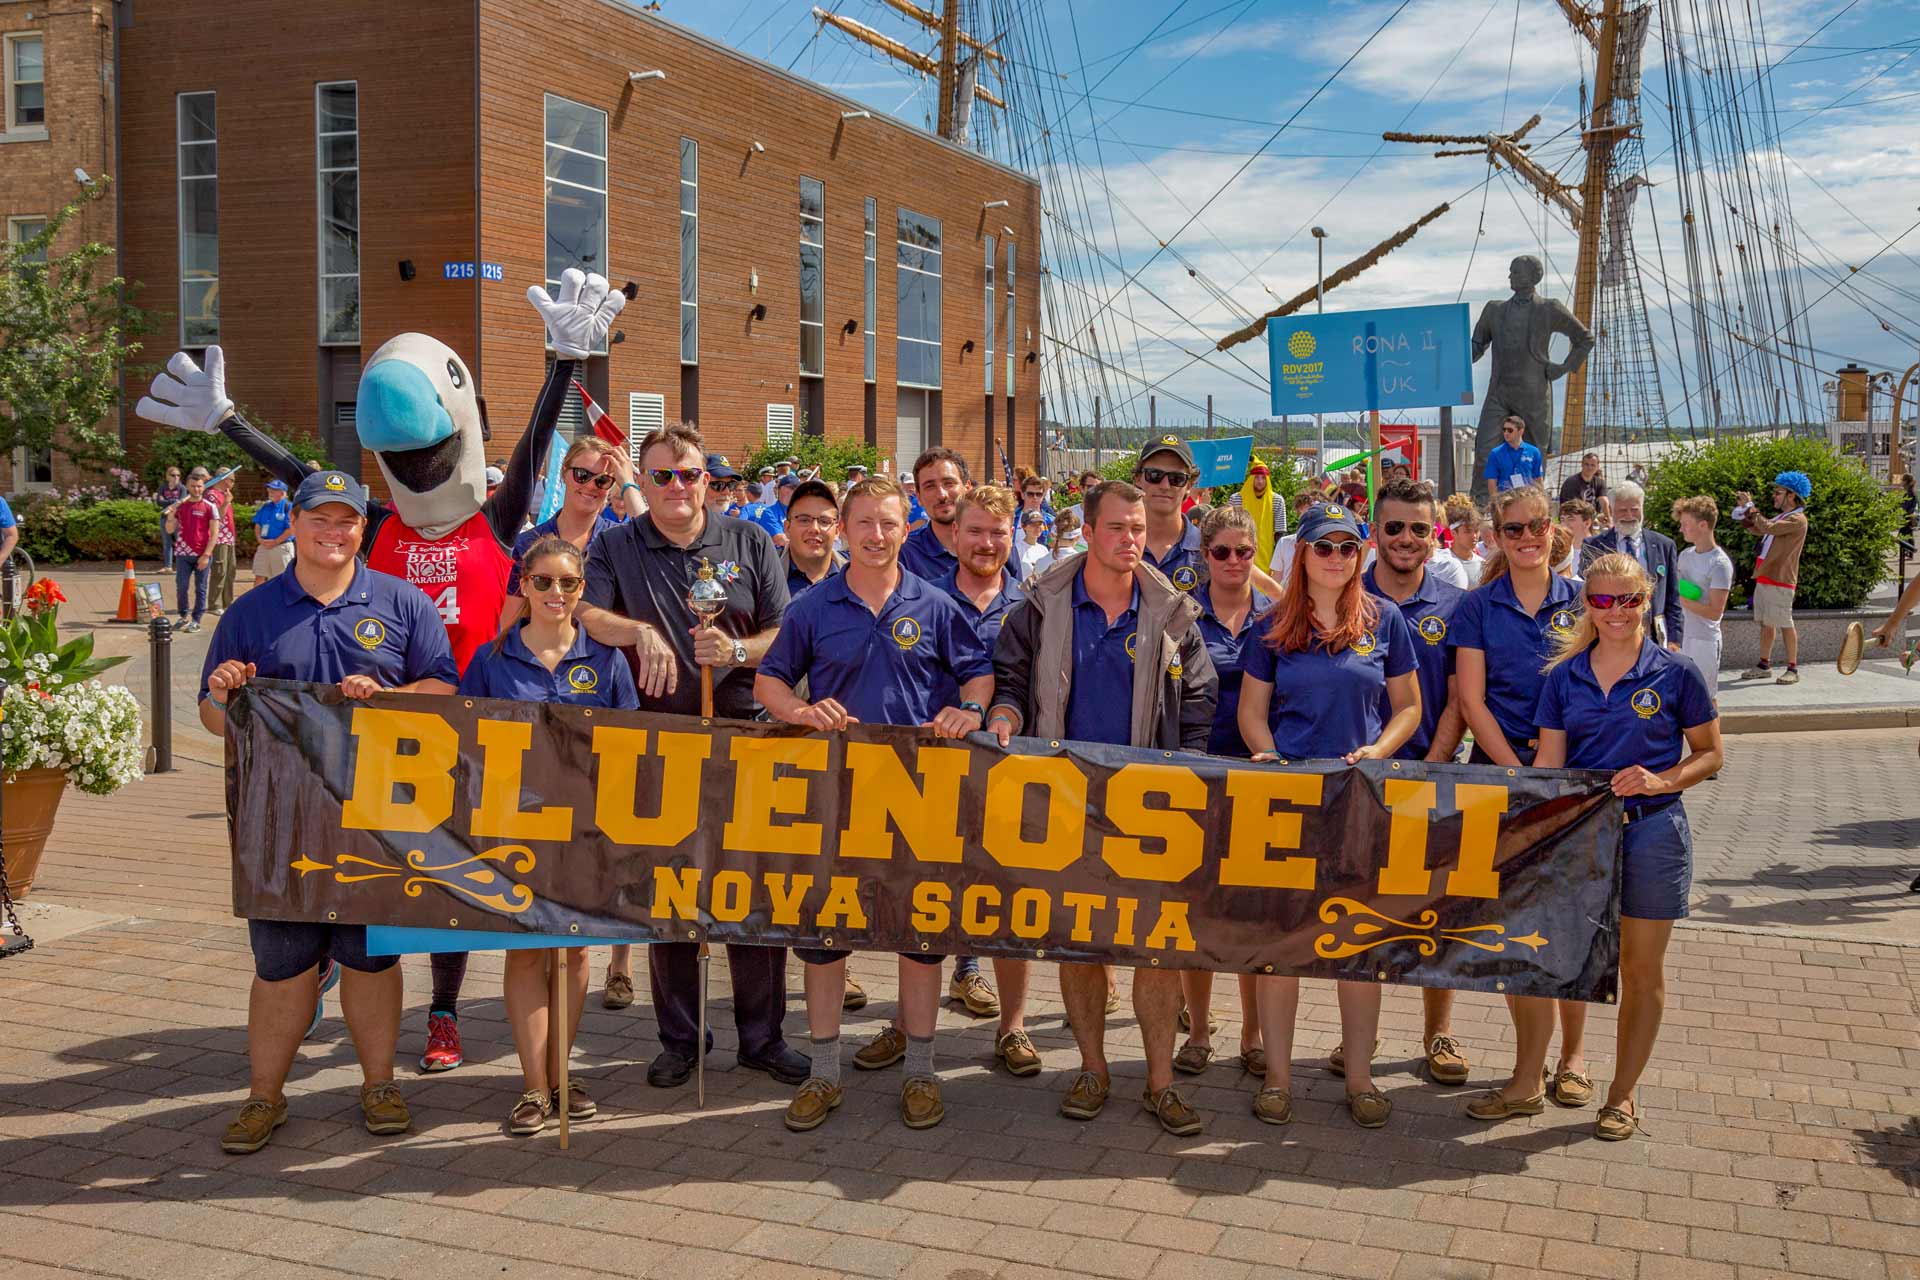 Bluenose II Team holding banner